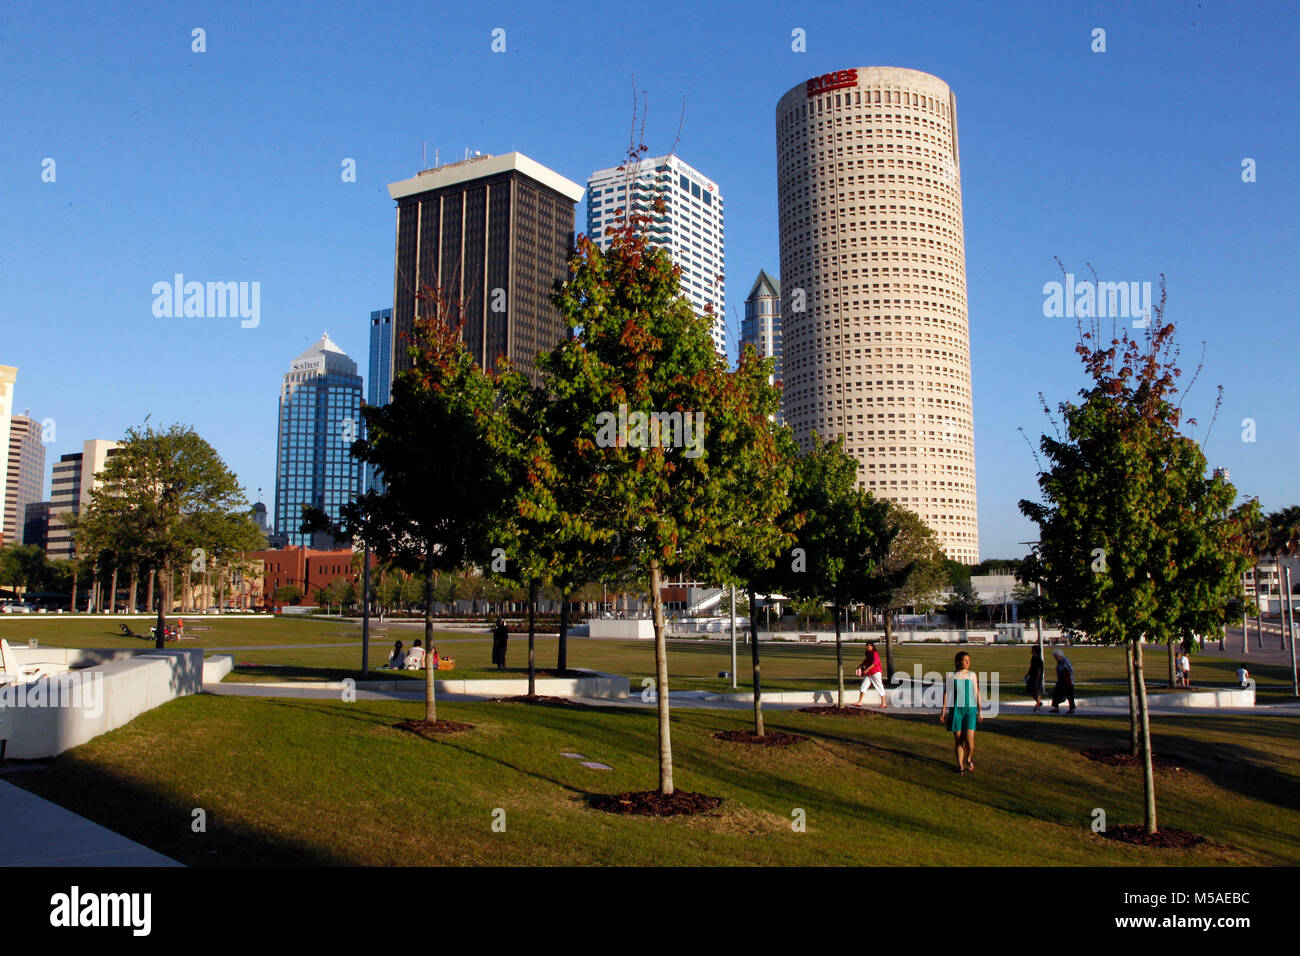 TAMPA, FLORIDA: Downtown Tampa landscape views from Curtis Hixon Park along Tampa's Riverwalk. Stock Photo